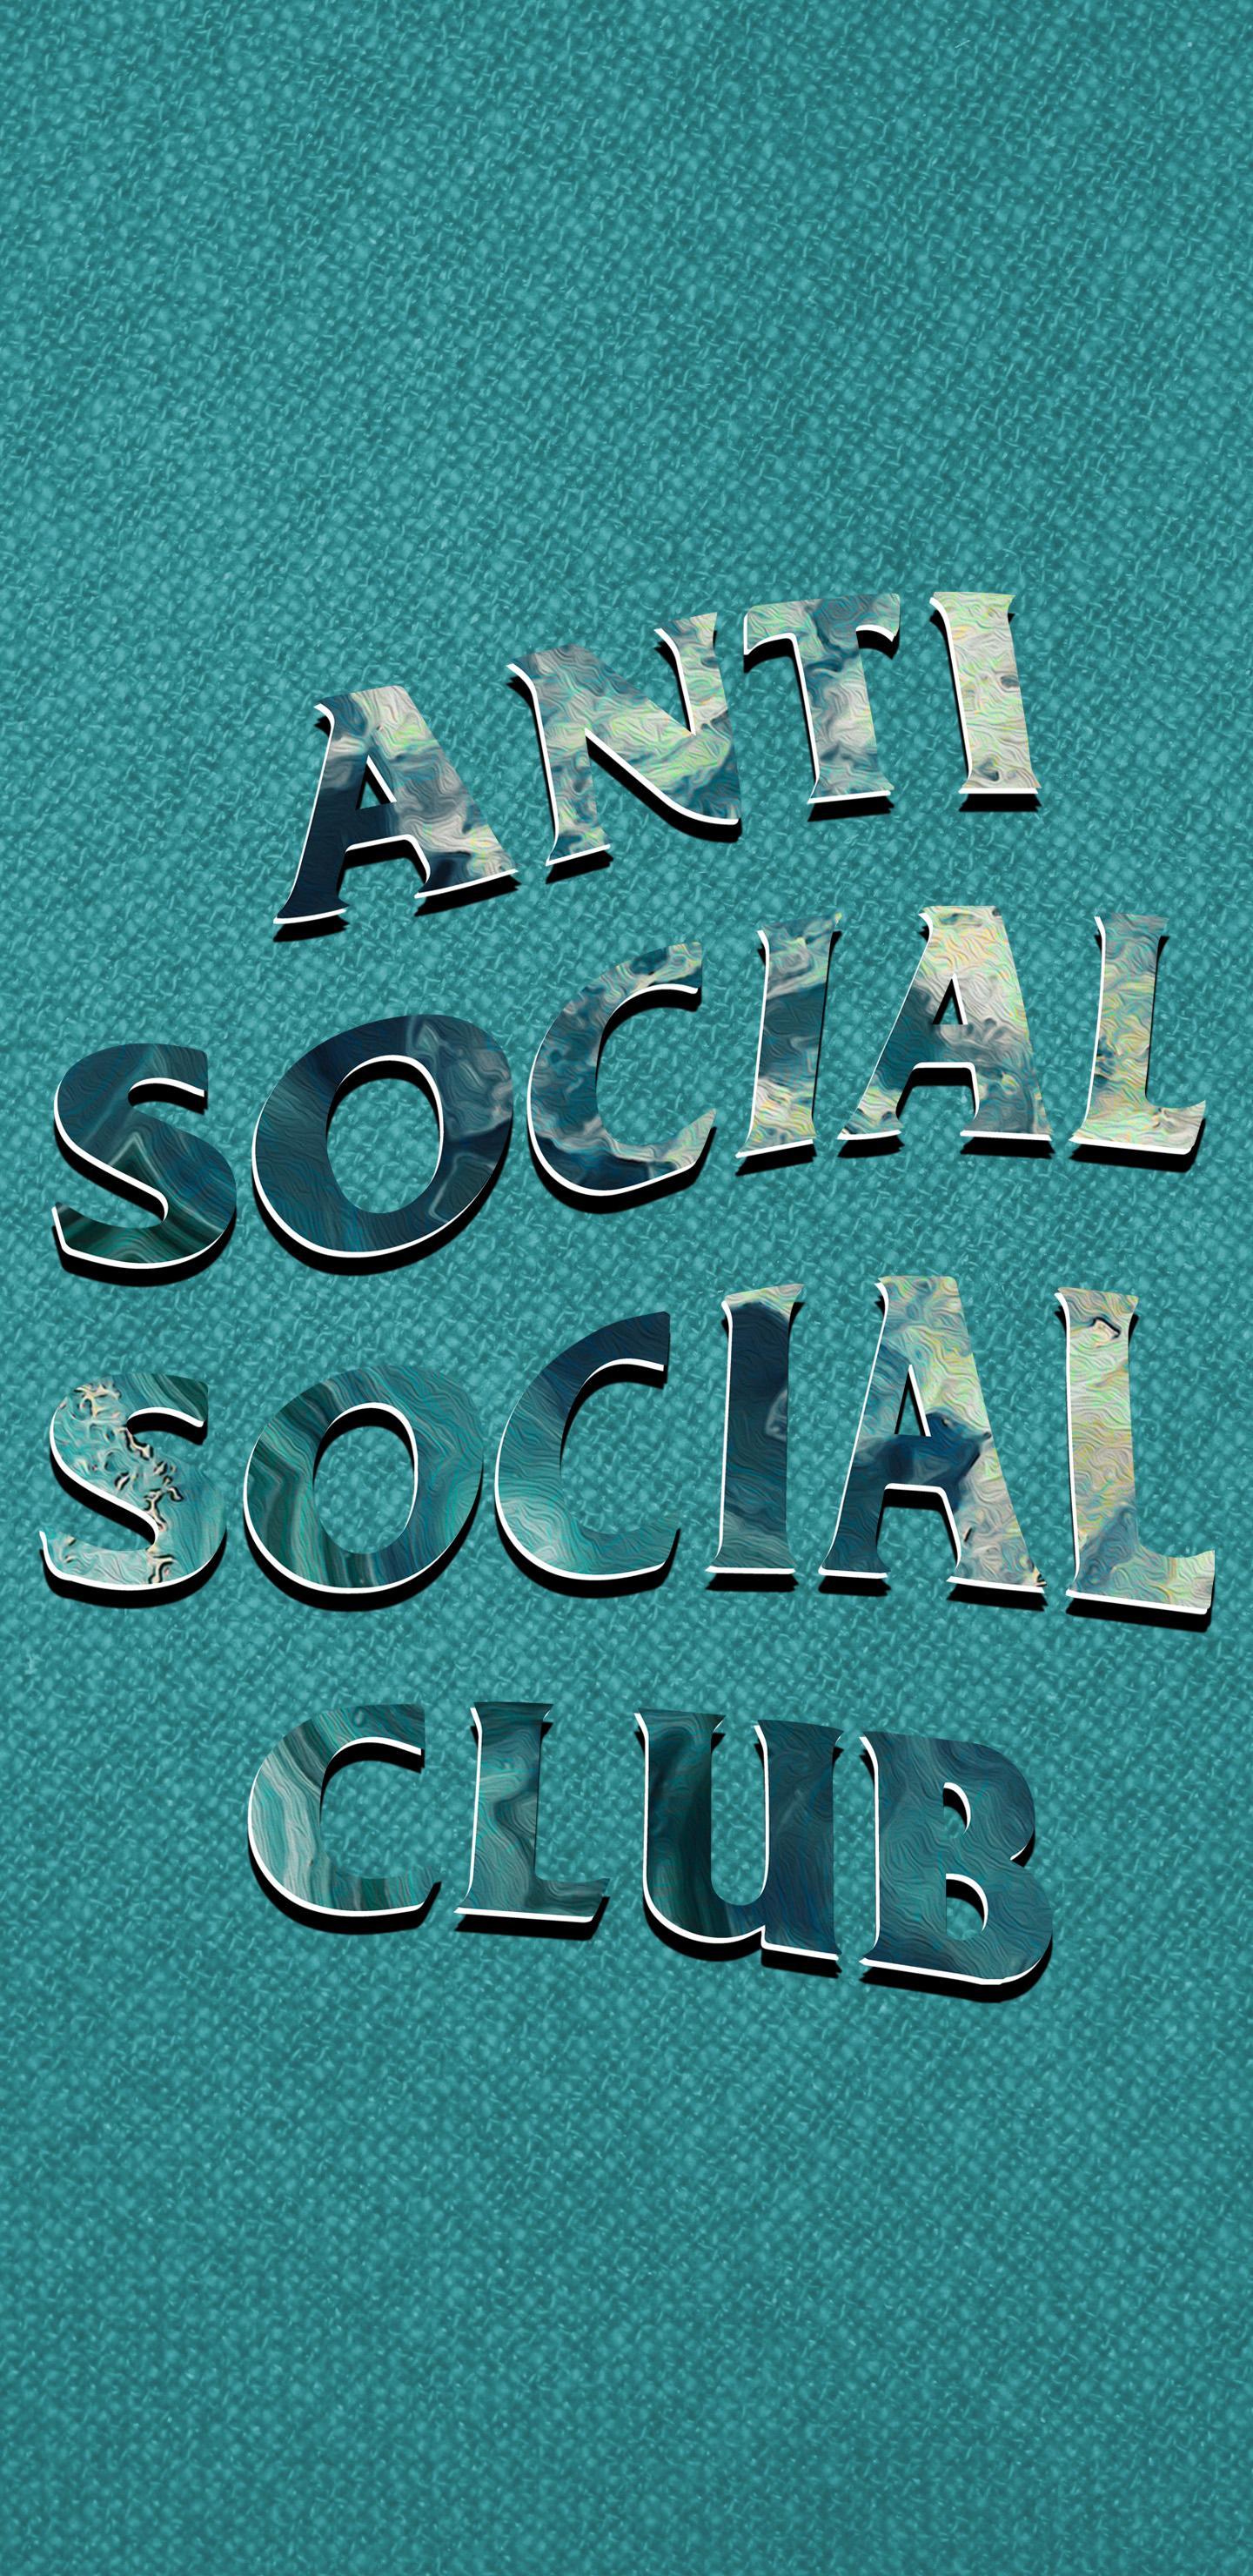 Anti Social Social Club iPhone Wallpapers - Wallpaper Cave